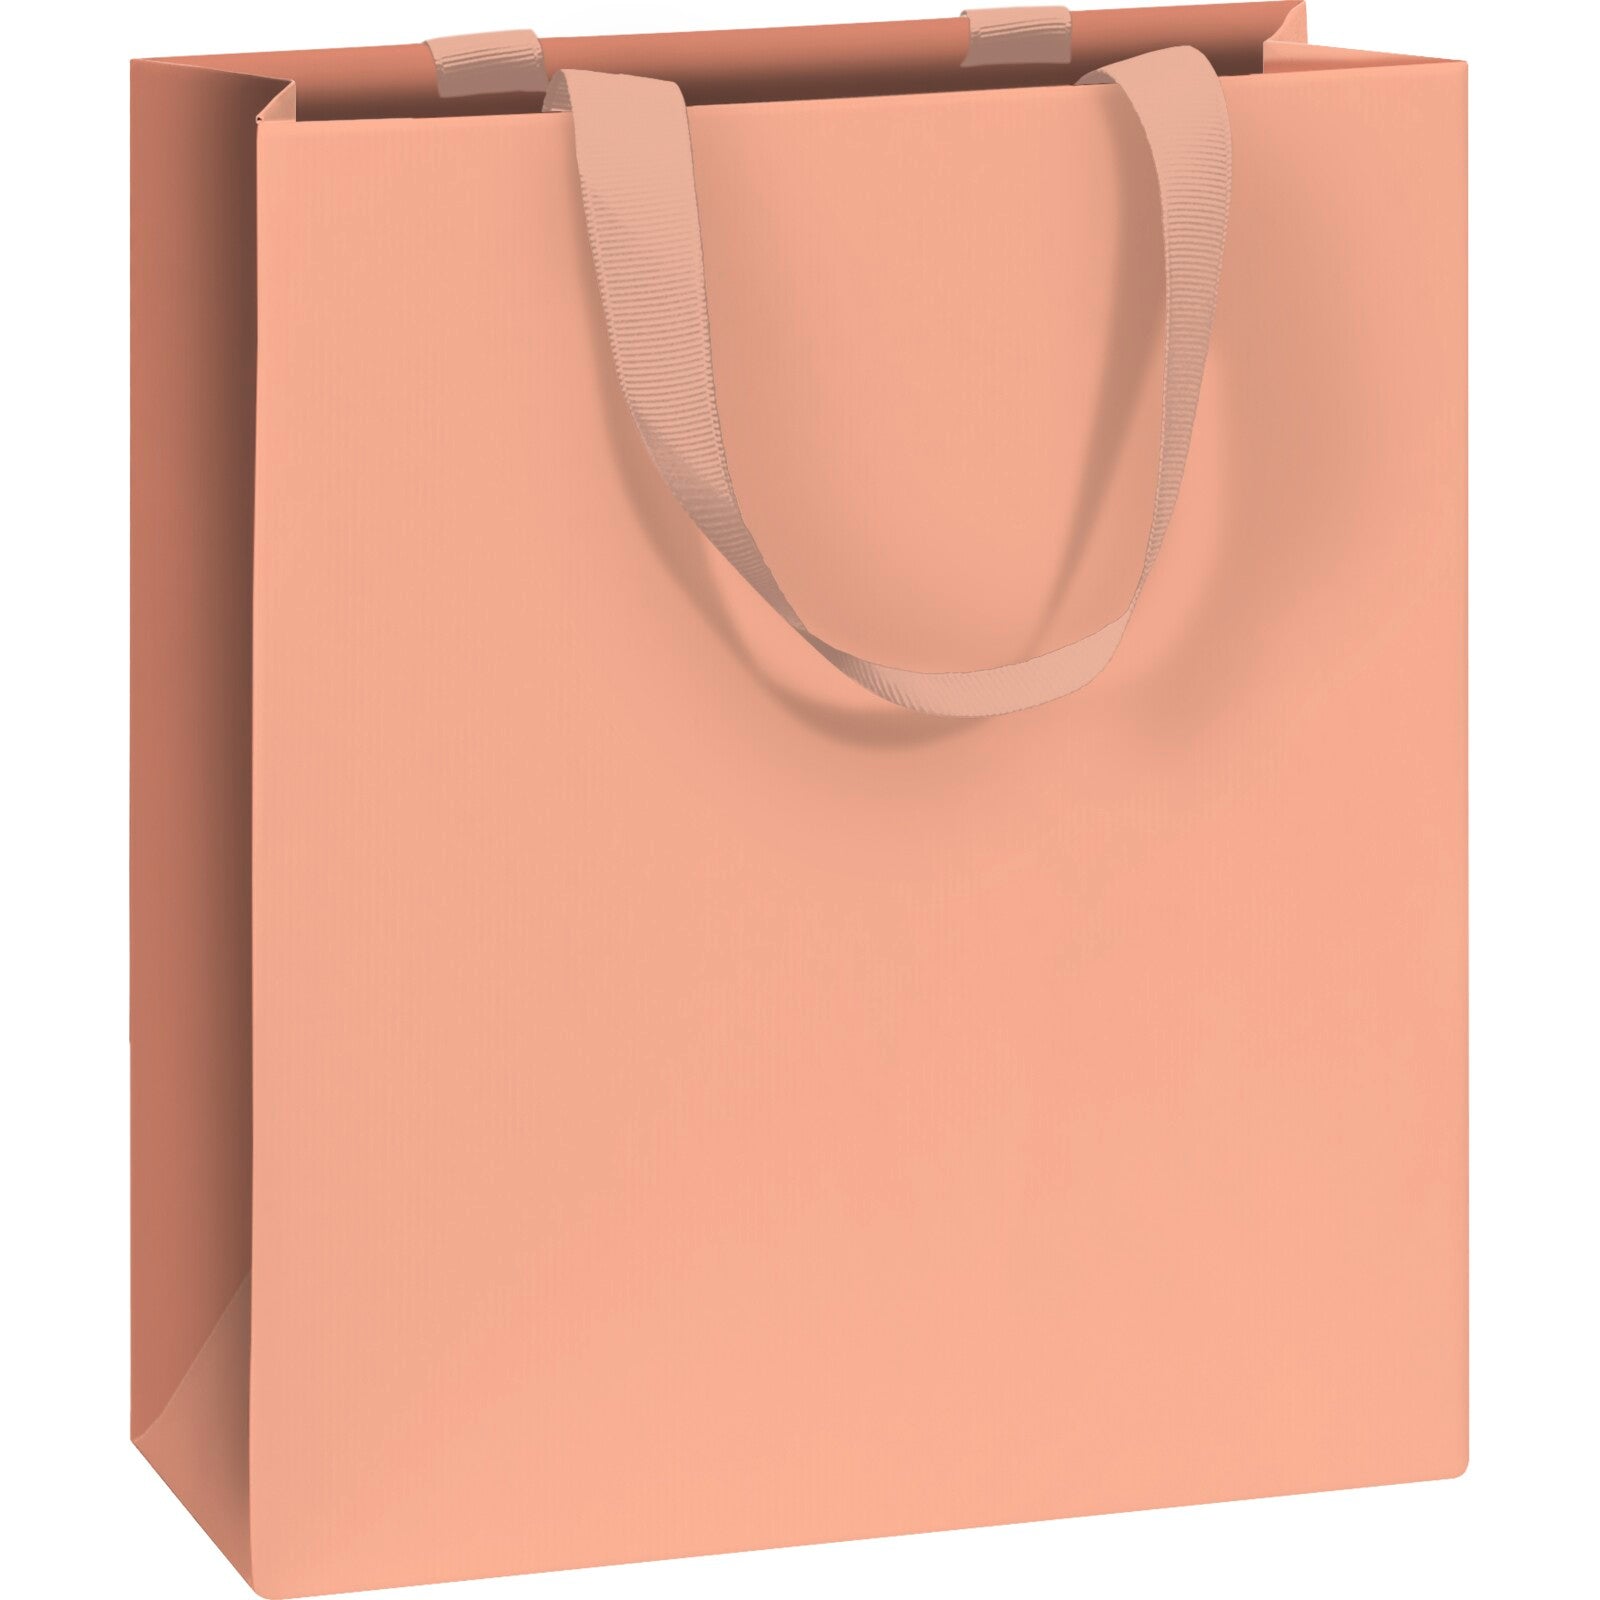 Crystal Rose Medium Gift Bag by penny black